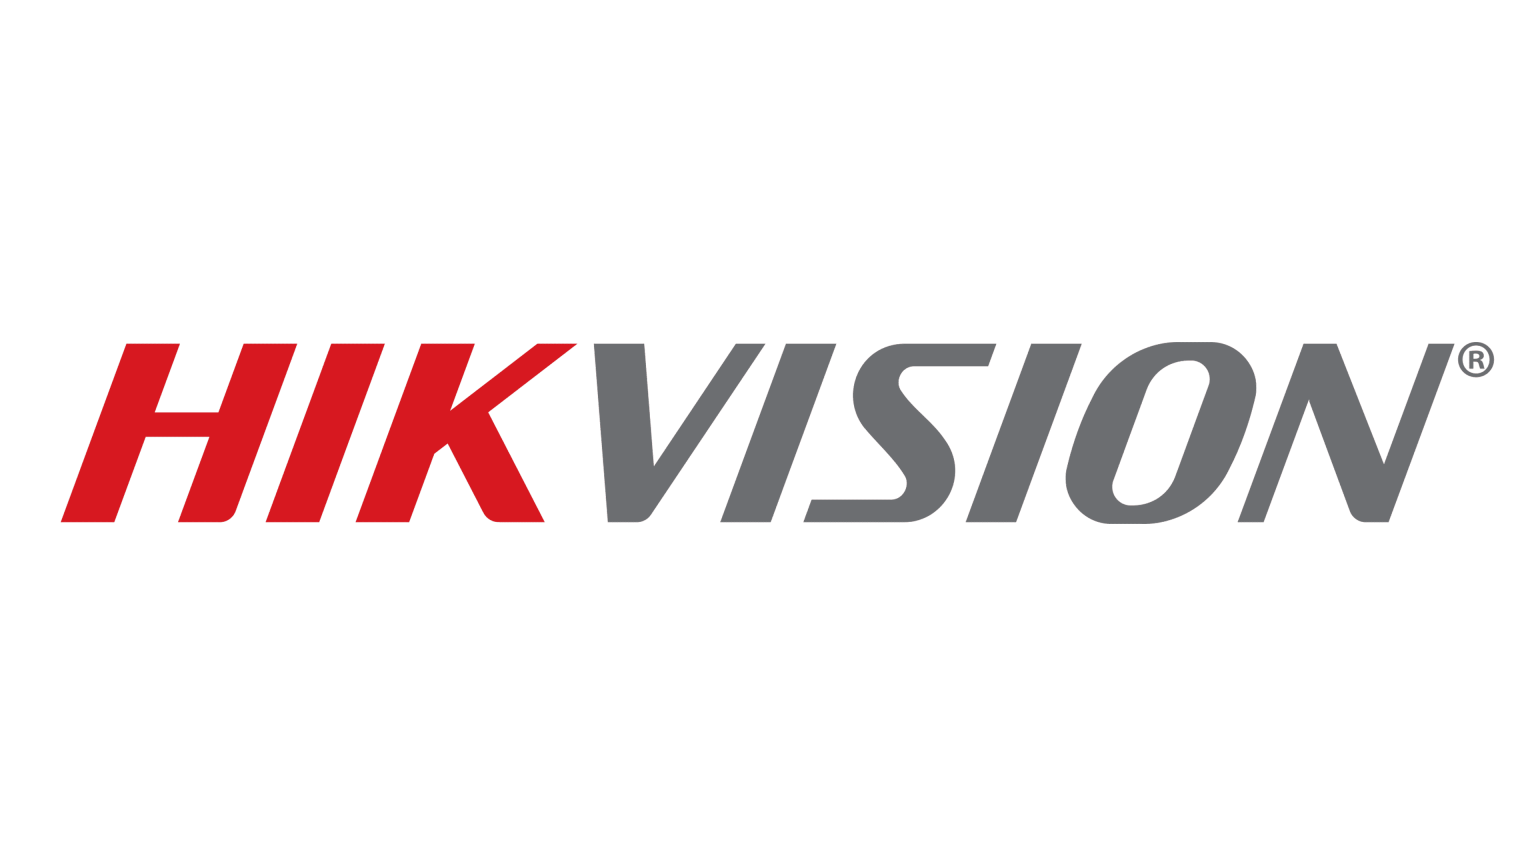 Hikvision-logo-1536x864